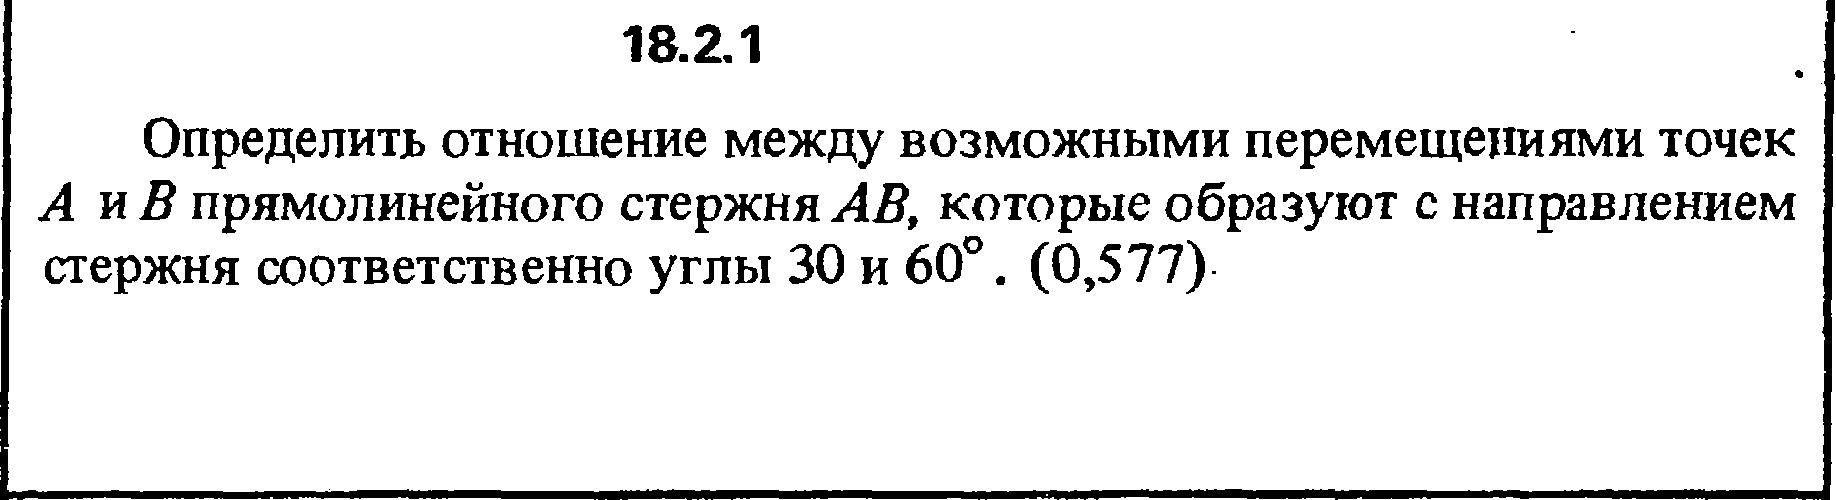 Решение 18.2.1 из сборника (решебника) Кепе О.Е. 1989